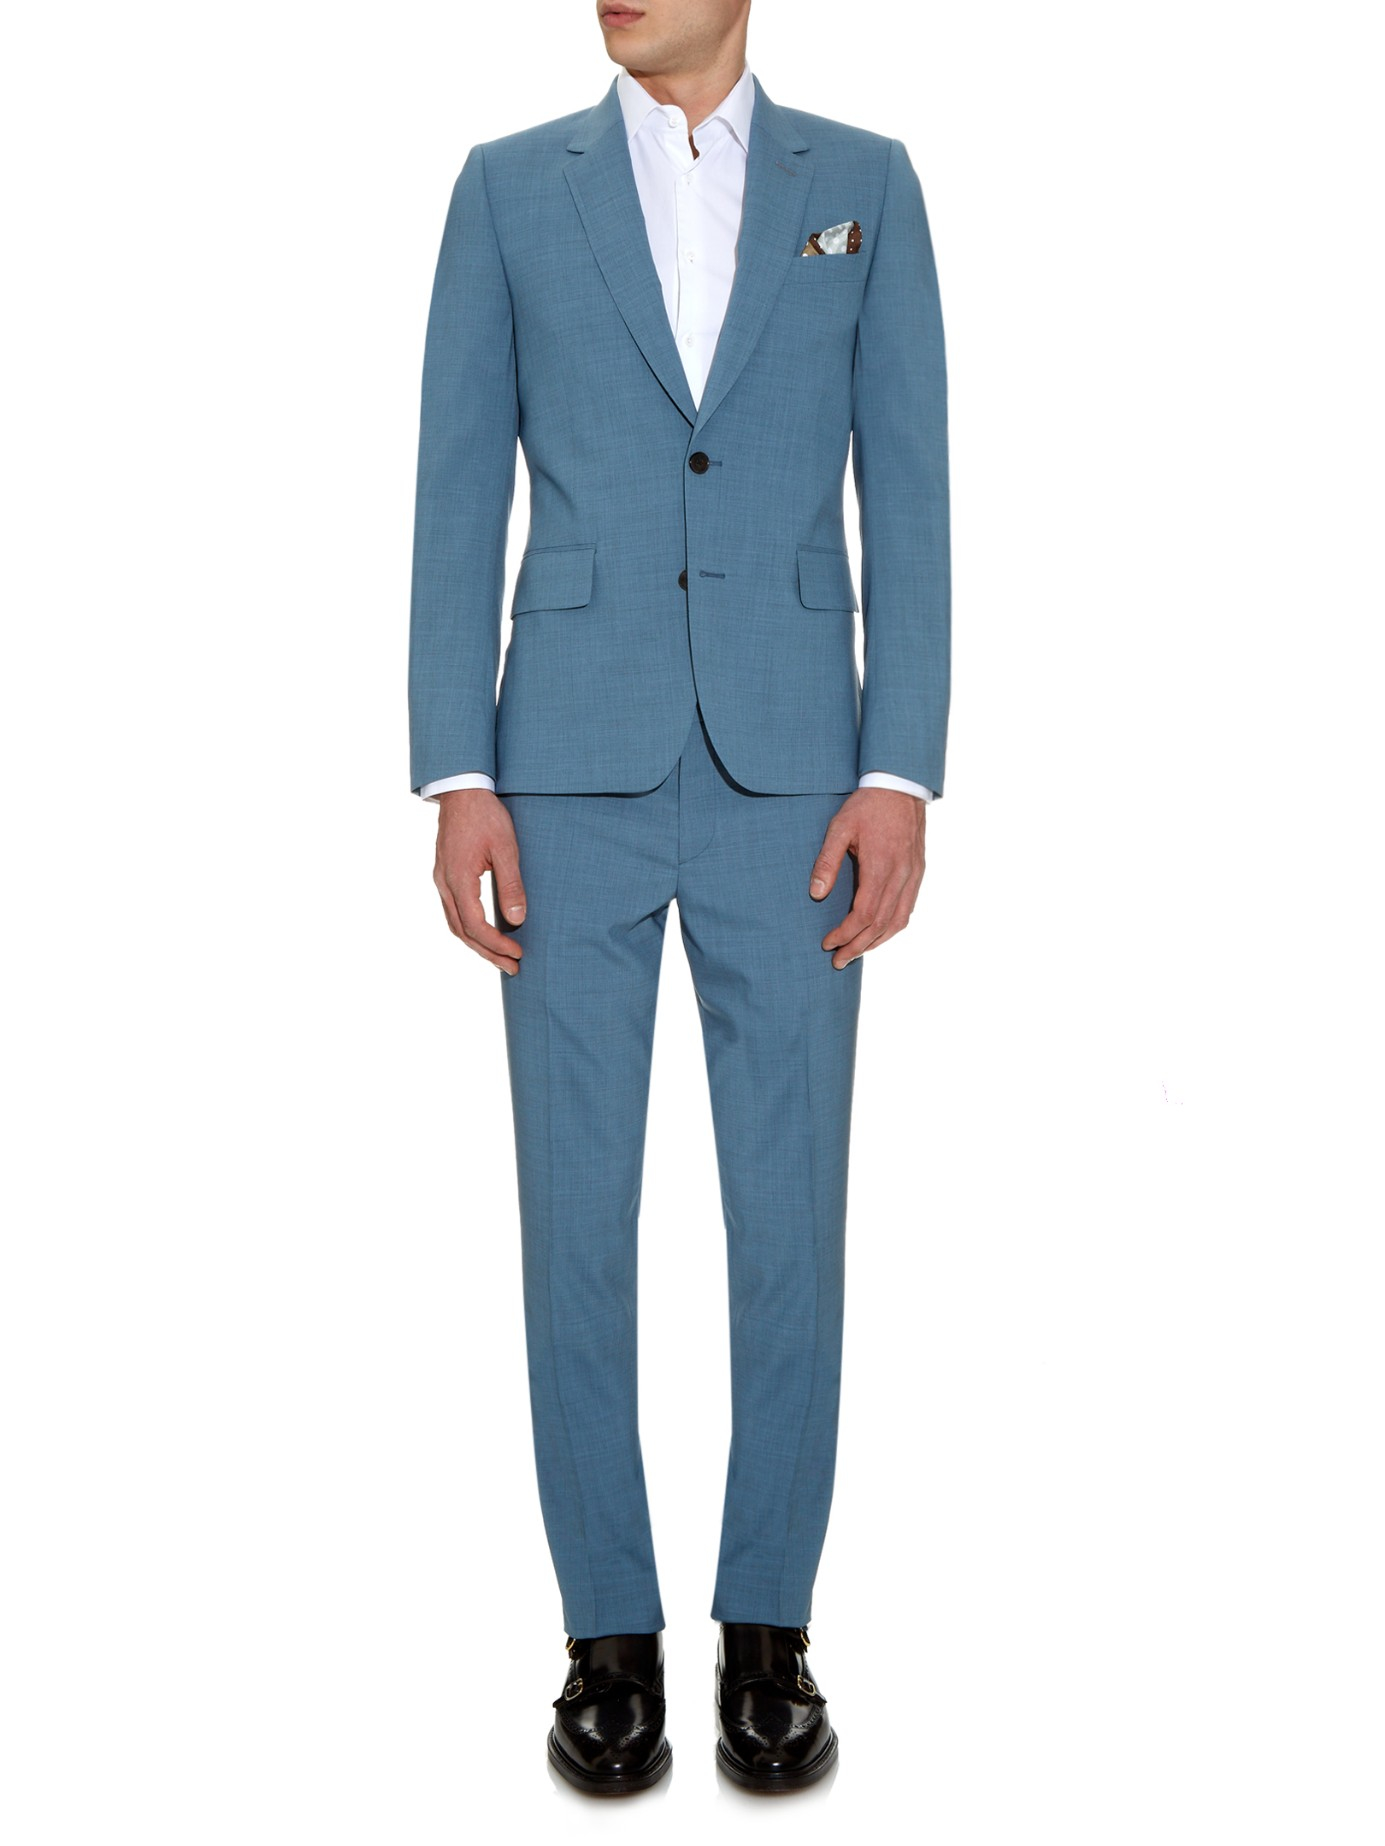 Paul Smith Soho-fit Wool-blend Suit in Light Blue (Blue) for Men - Lyst